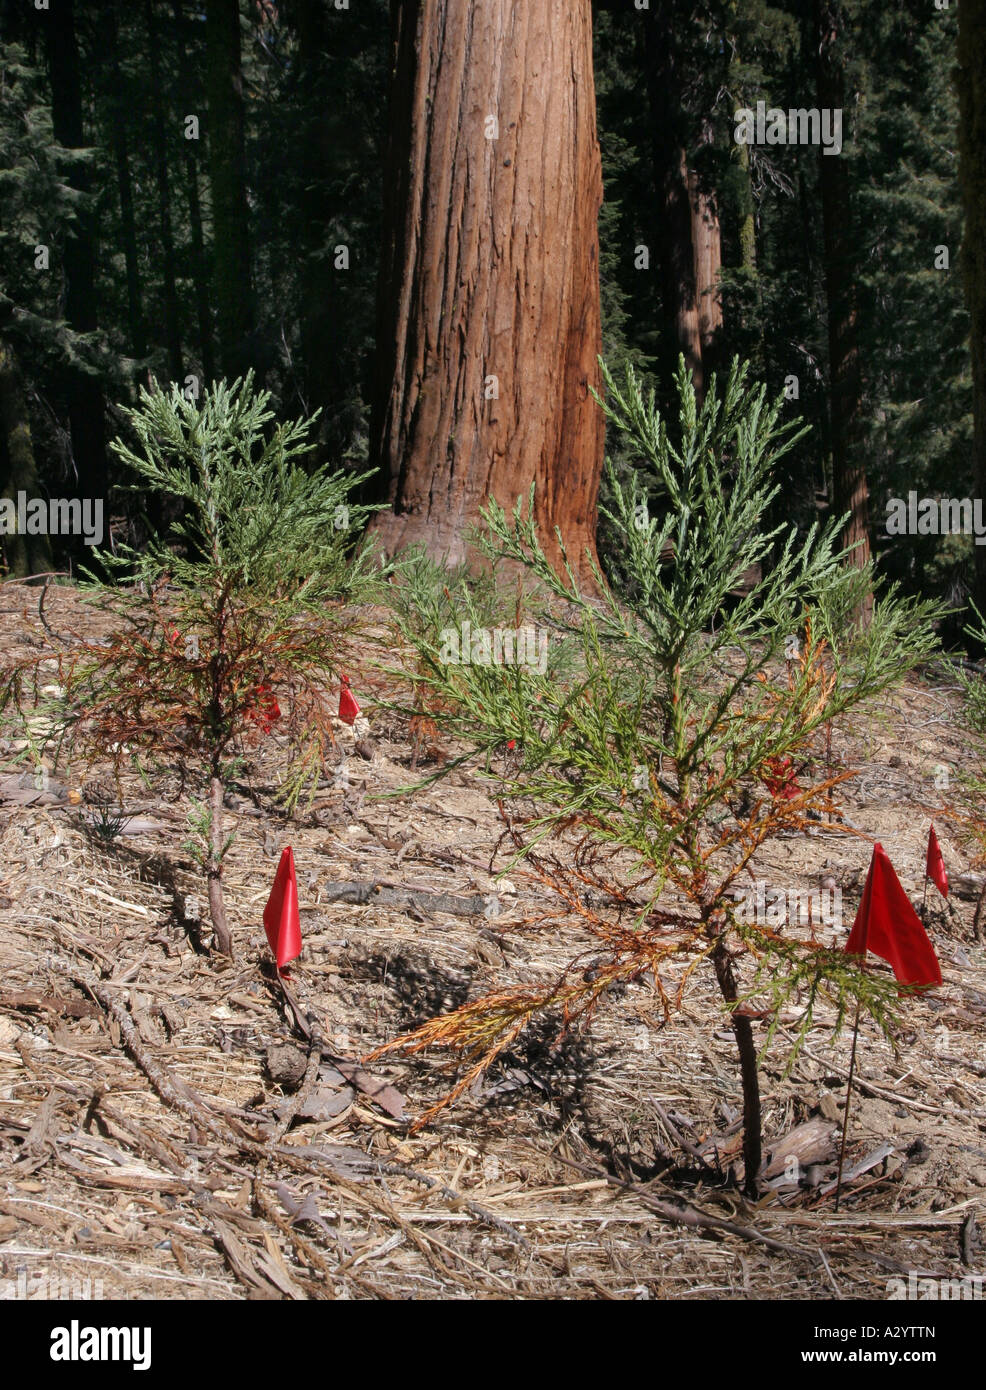 Giant sequoia tree seedling Stock Photo